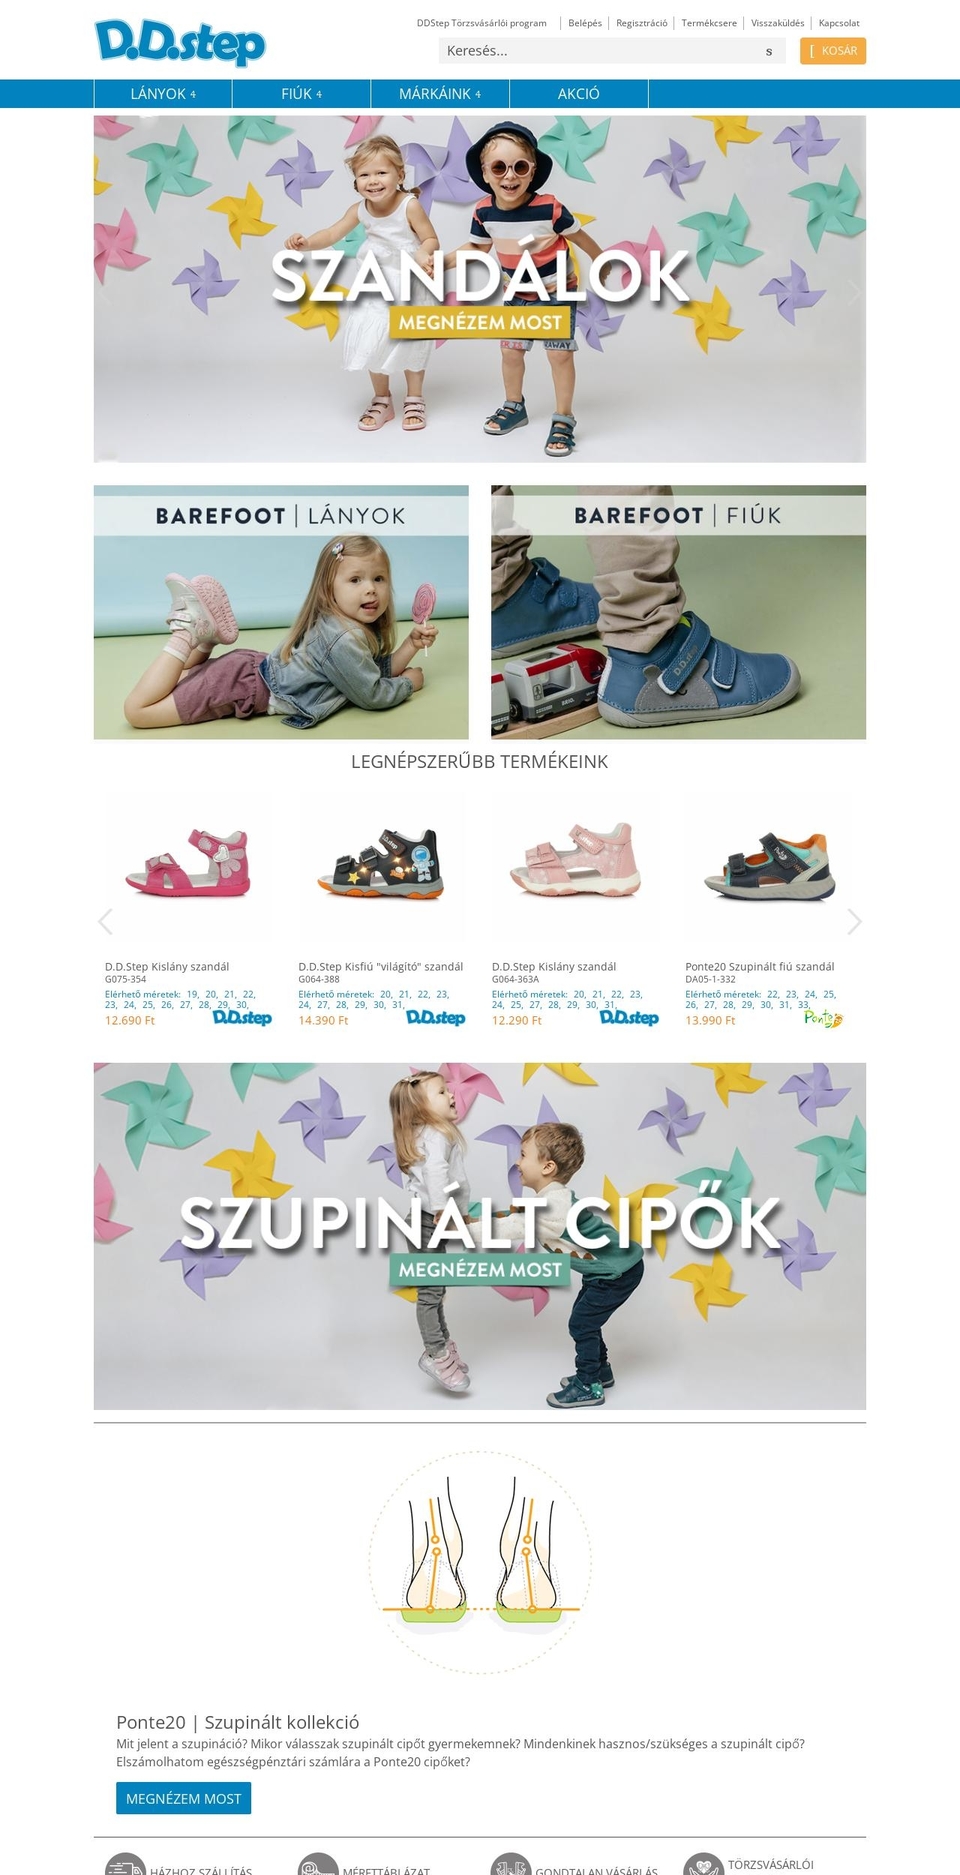 DDStep Shopify theme site example ddsteponline.hu